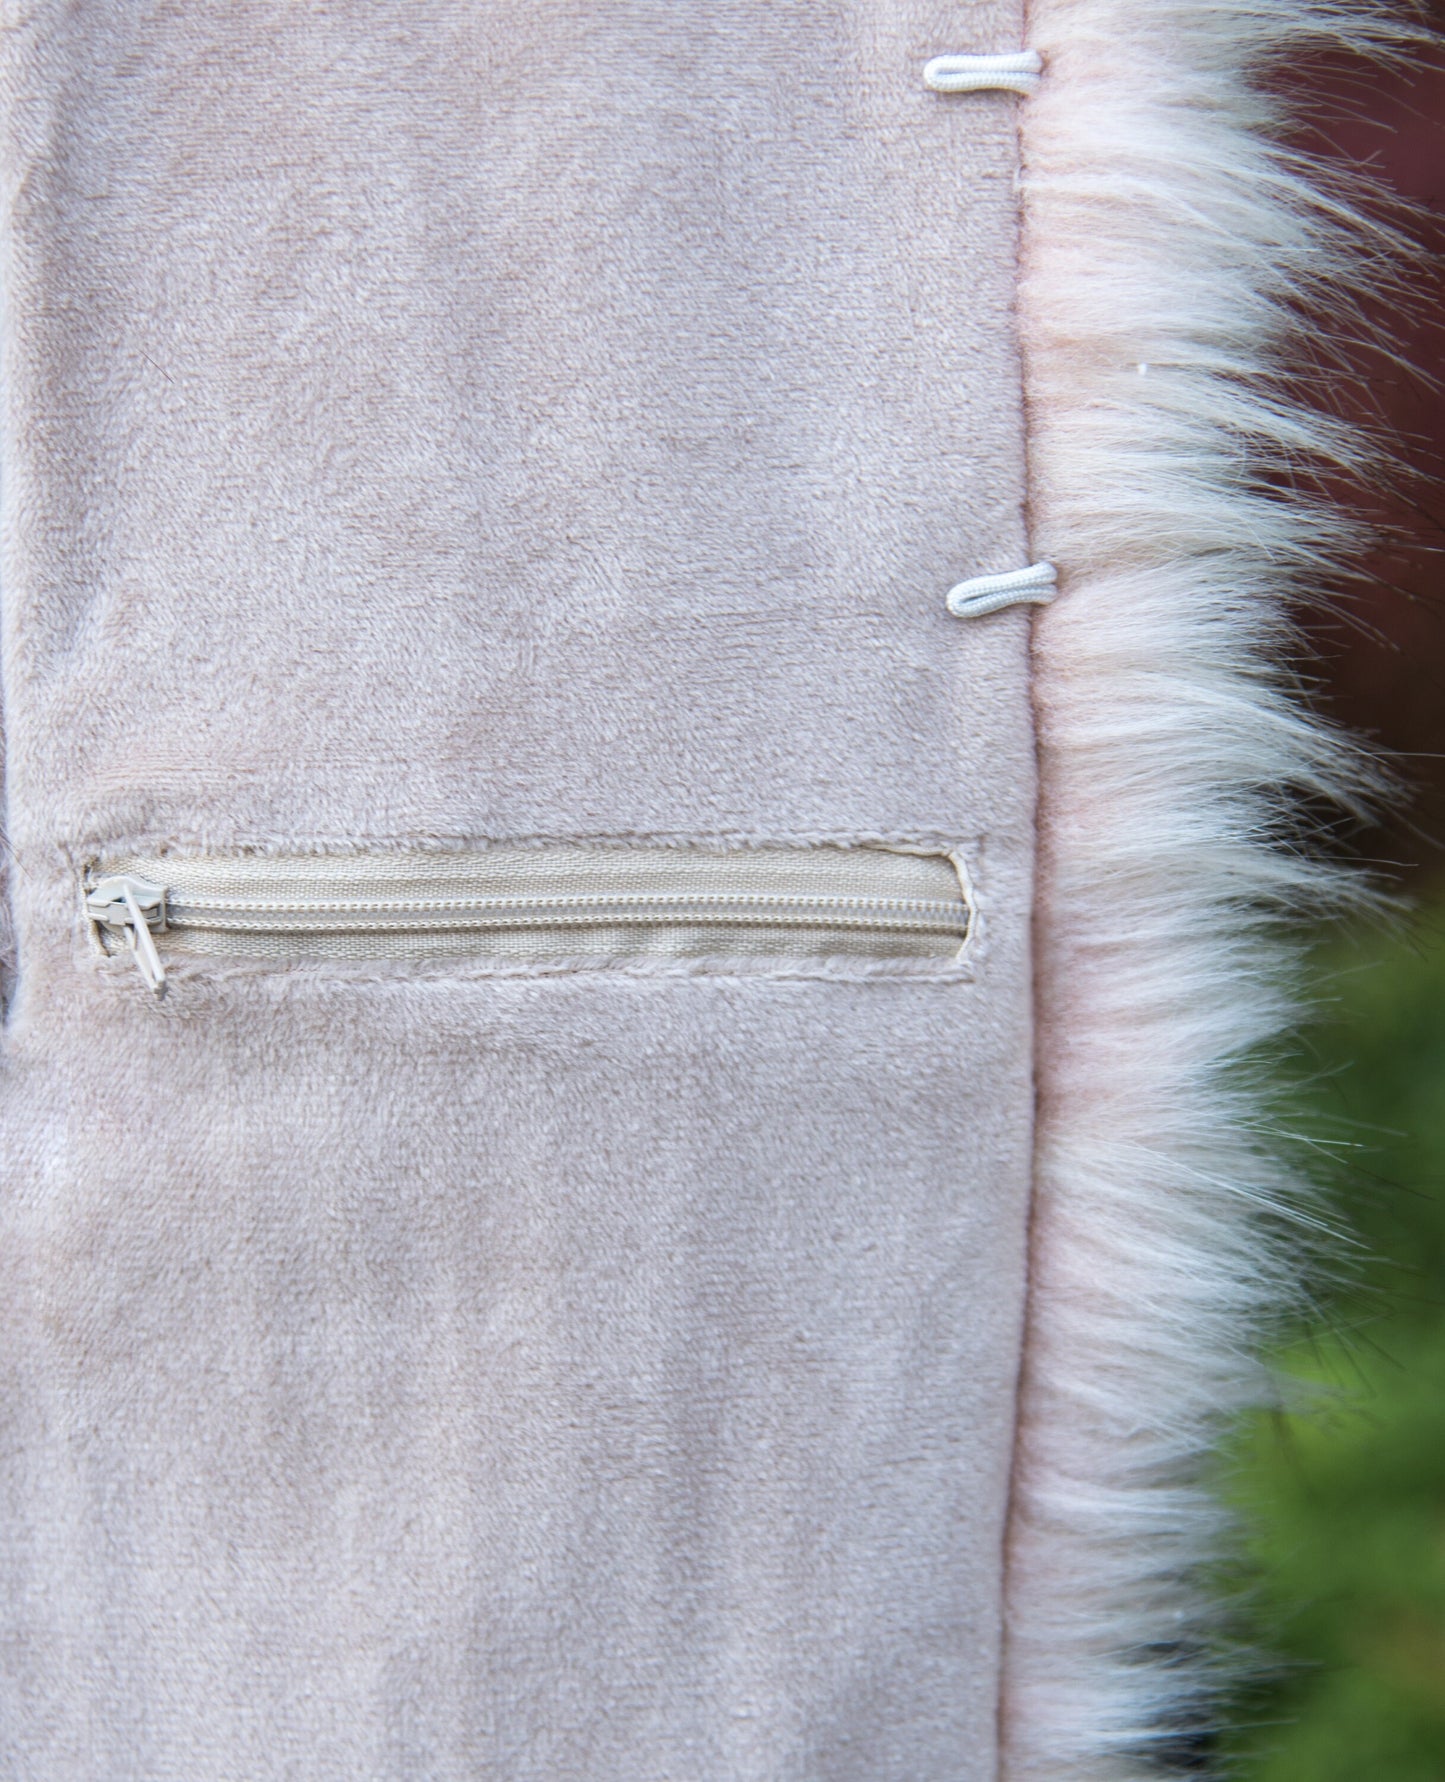 Pocket! faux fur wrap, faux fur stole, faux fur shawl, bridal wrap, wedding shrug, faux fur cape, faux fur wrap bridal B001-ivory